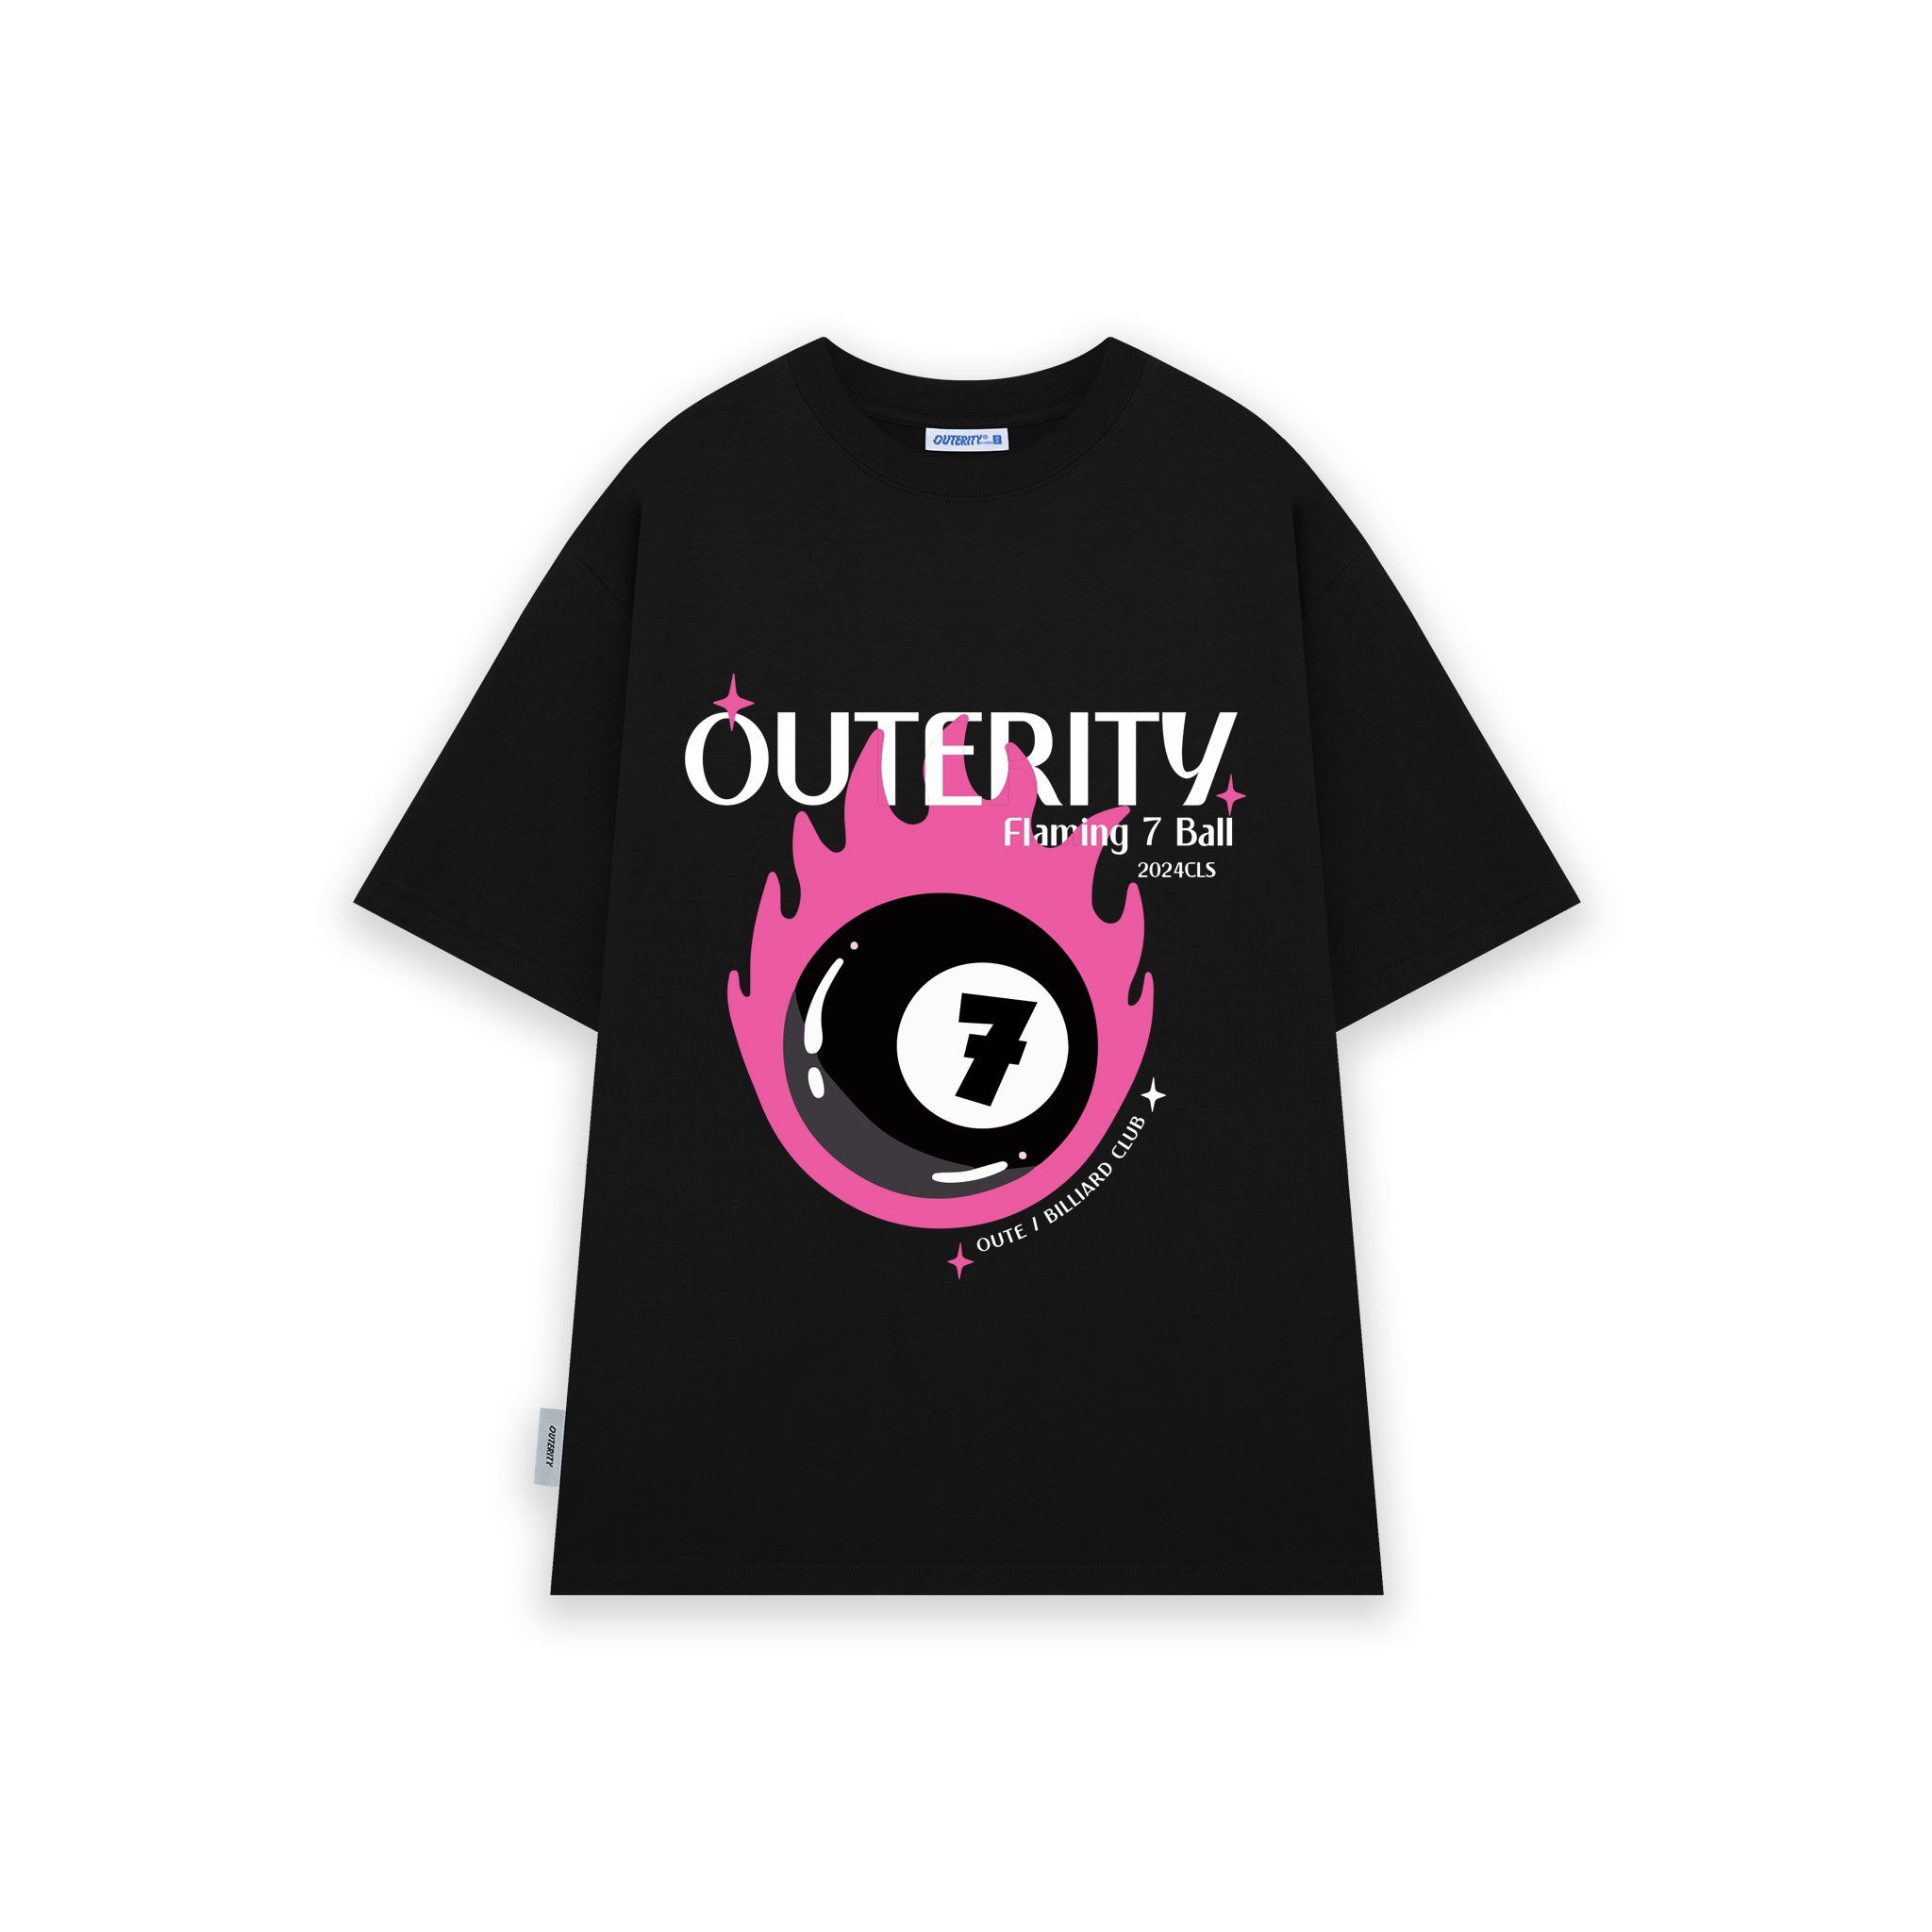  Outerity Billiard Club Tee / Black 